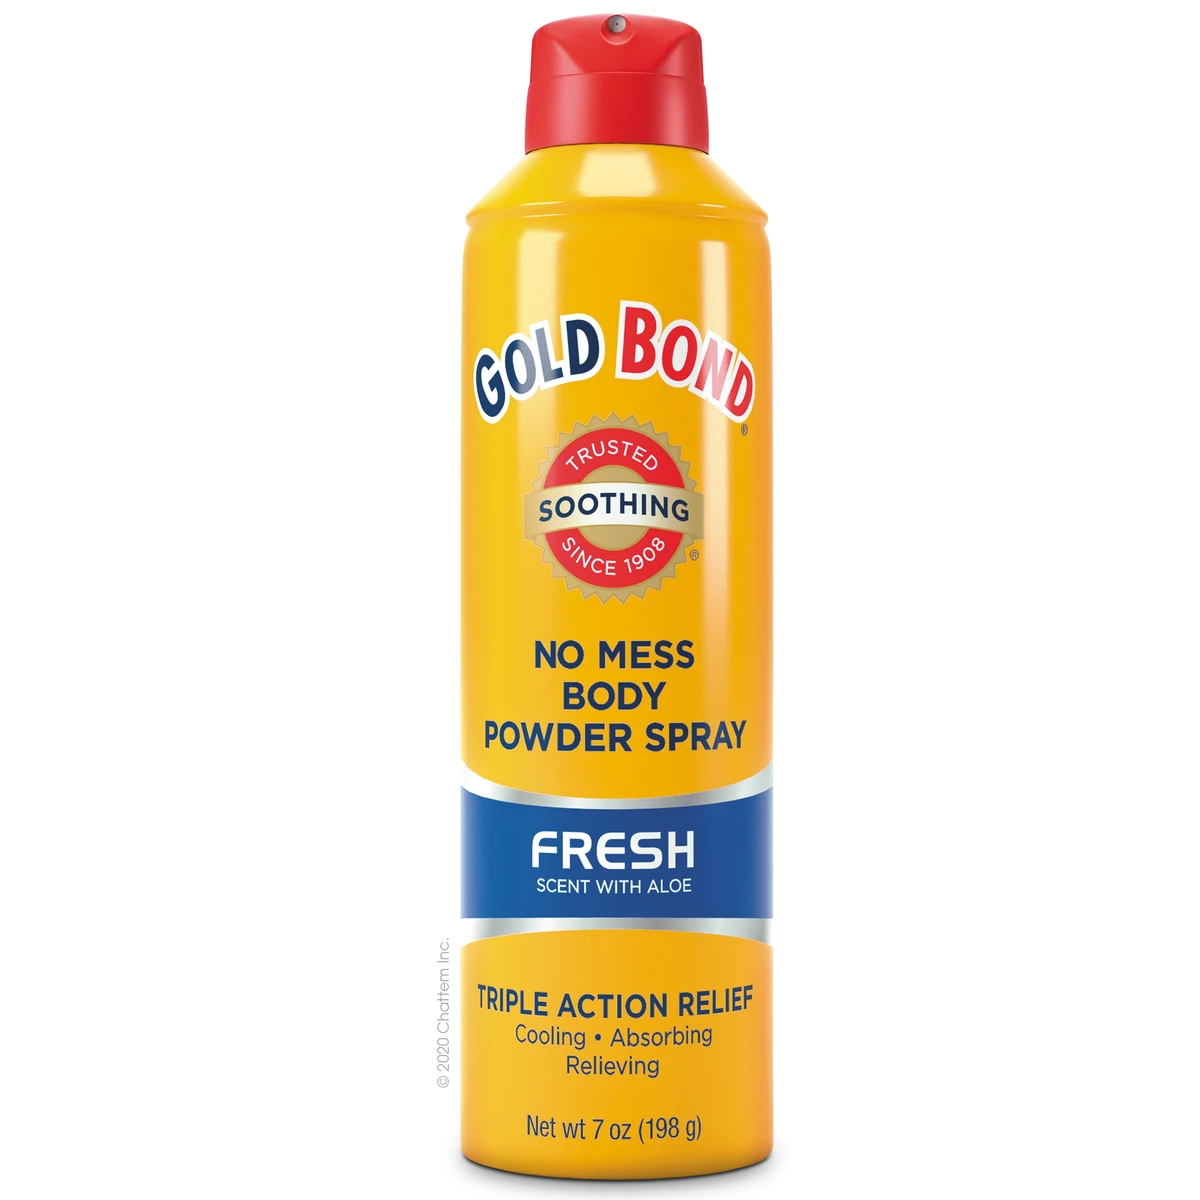 Gold Bond Fresh Triple Action Relief Powder Spray 7oz